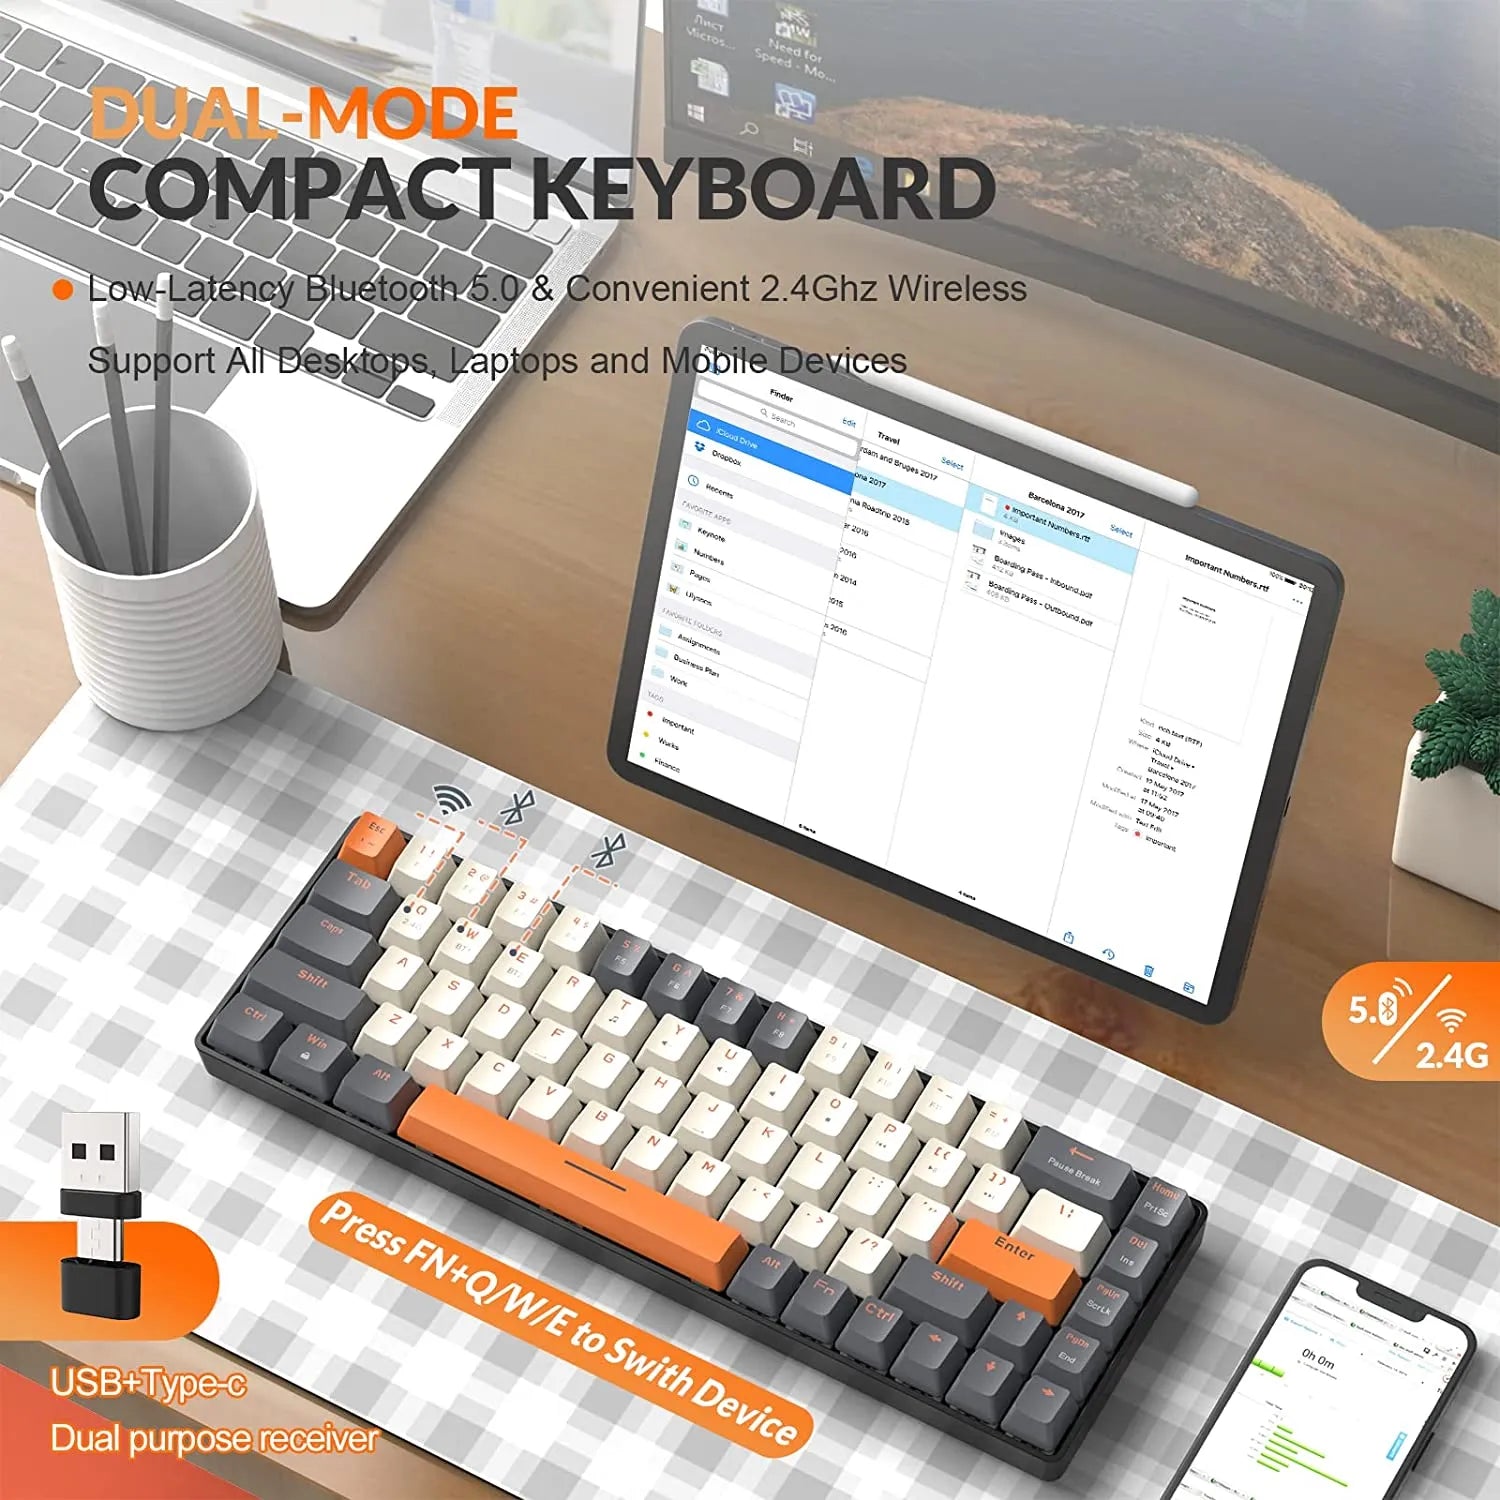 60% Wireless Mechanical Keyboard - CineQuips